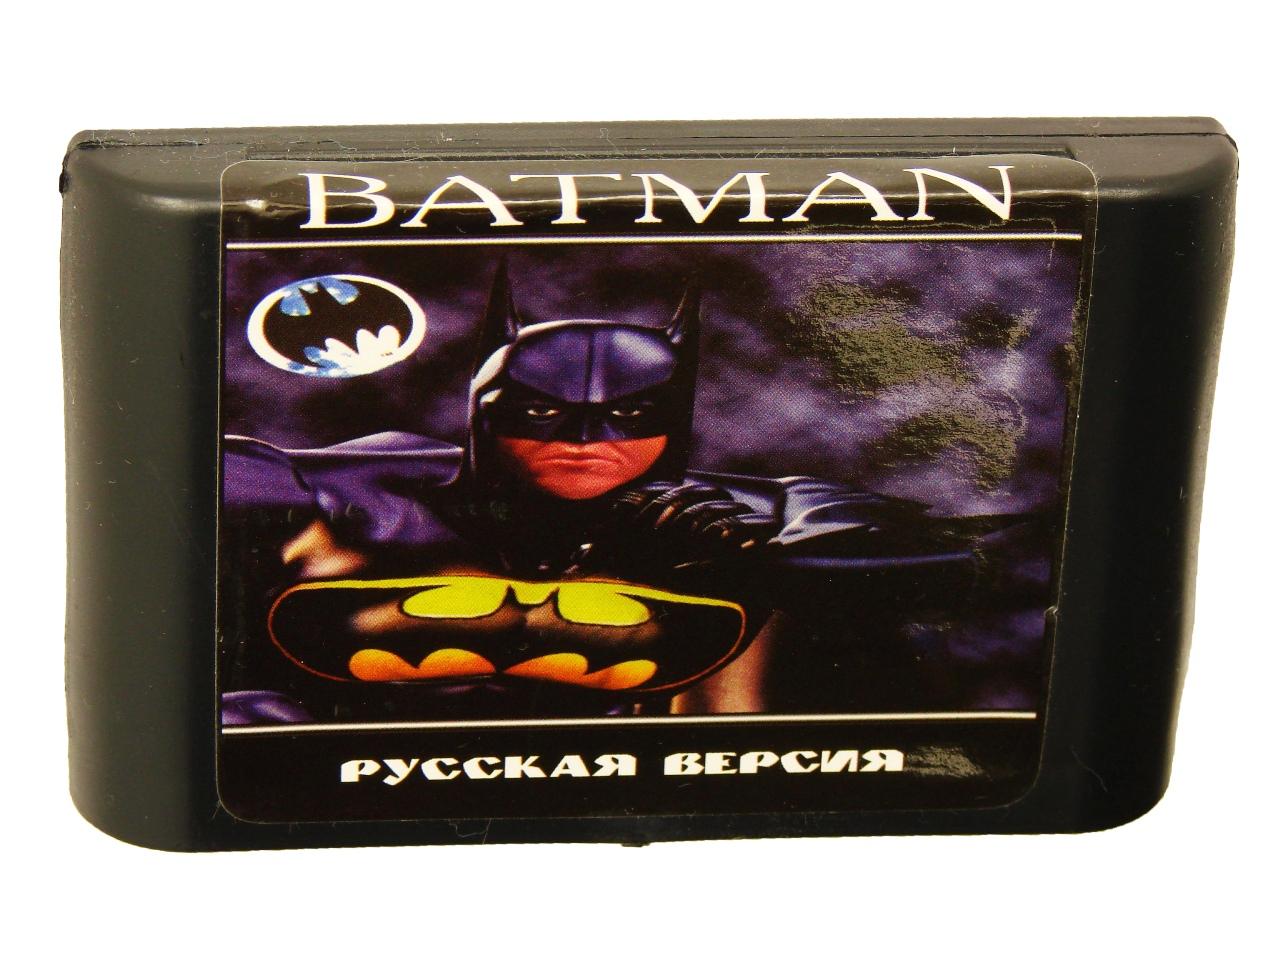   Sega Batman (Sega)